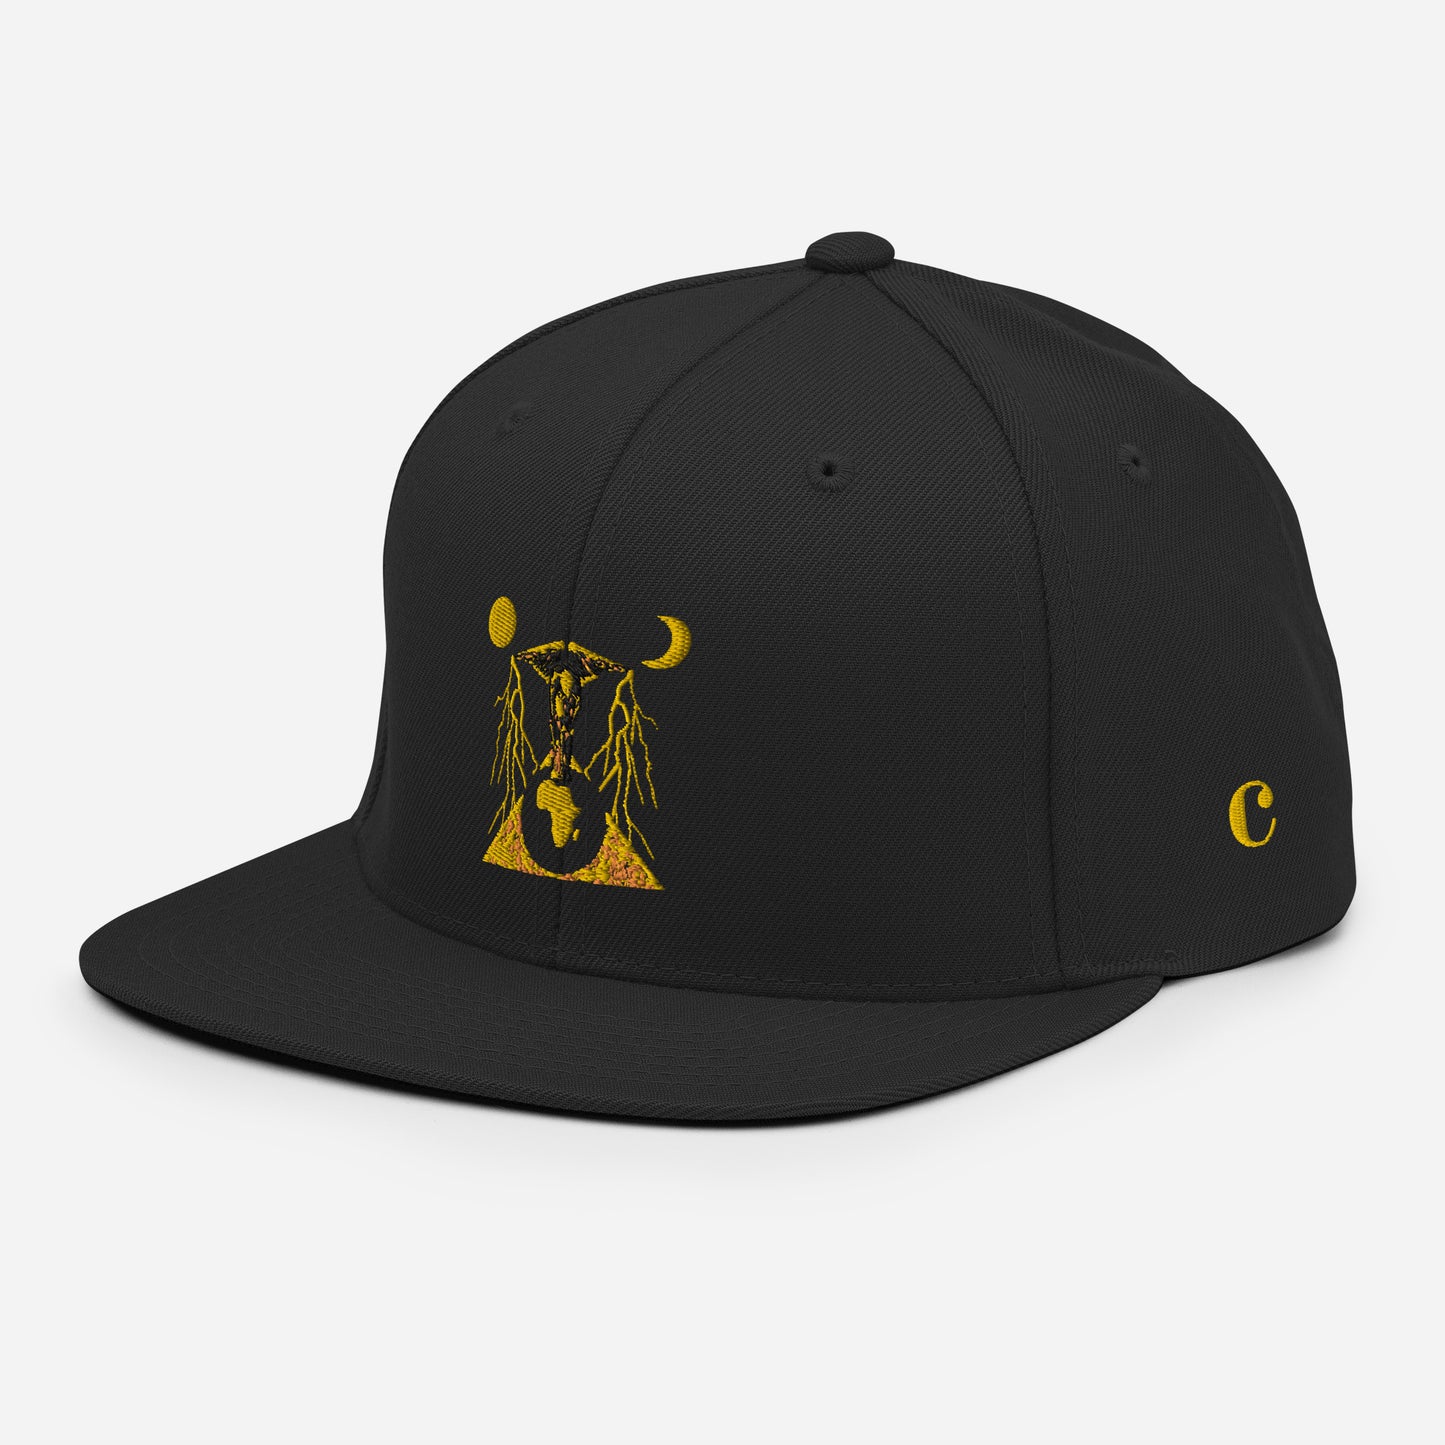 Gold African Angel - Snapback Hat